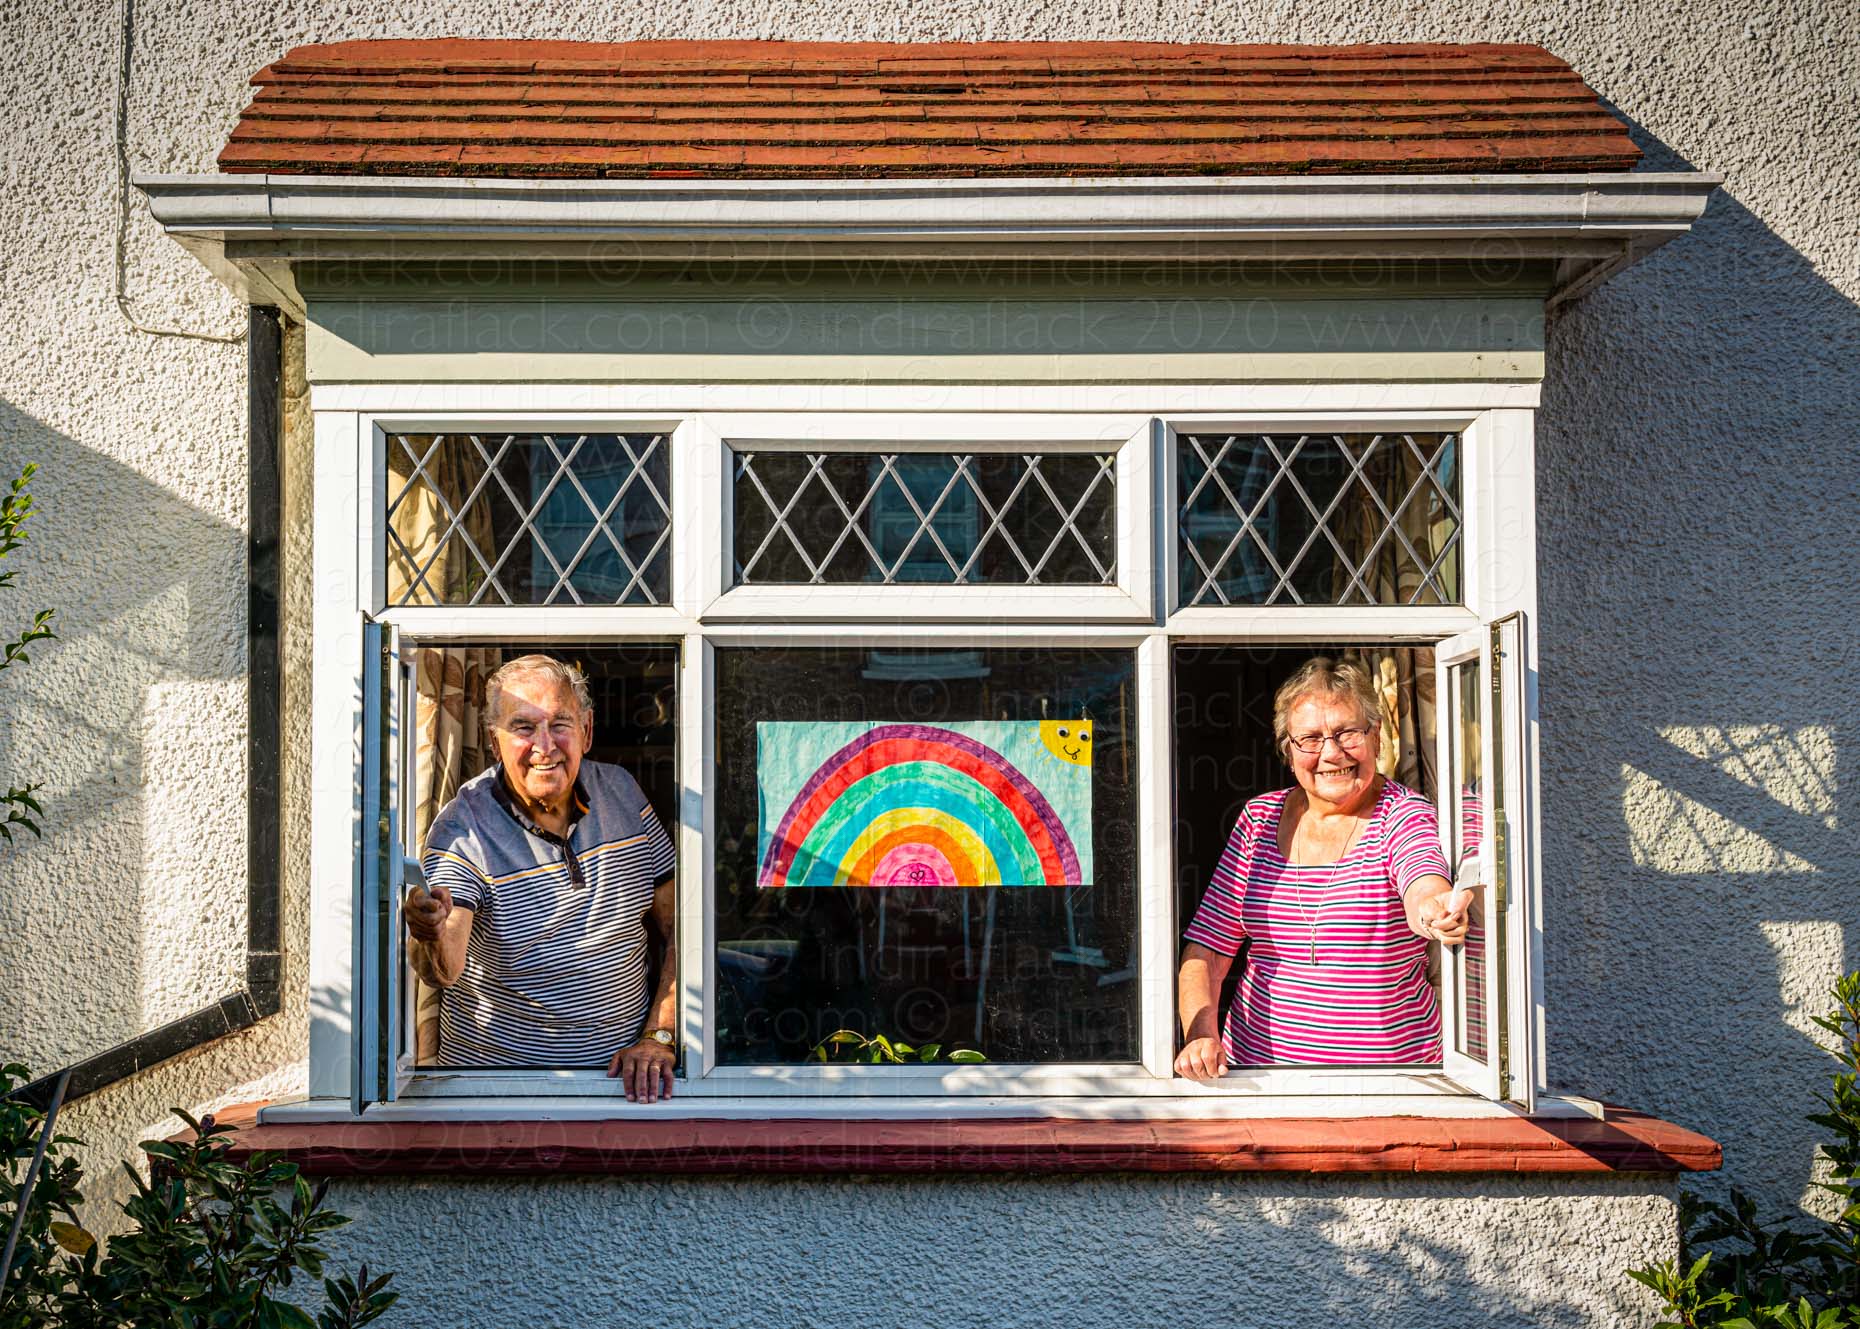 Ray & Margaret neighbours in lockdown portrait taken by Indira Flack portrait photographer